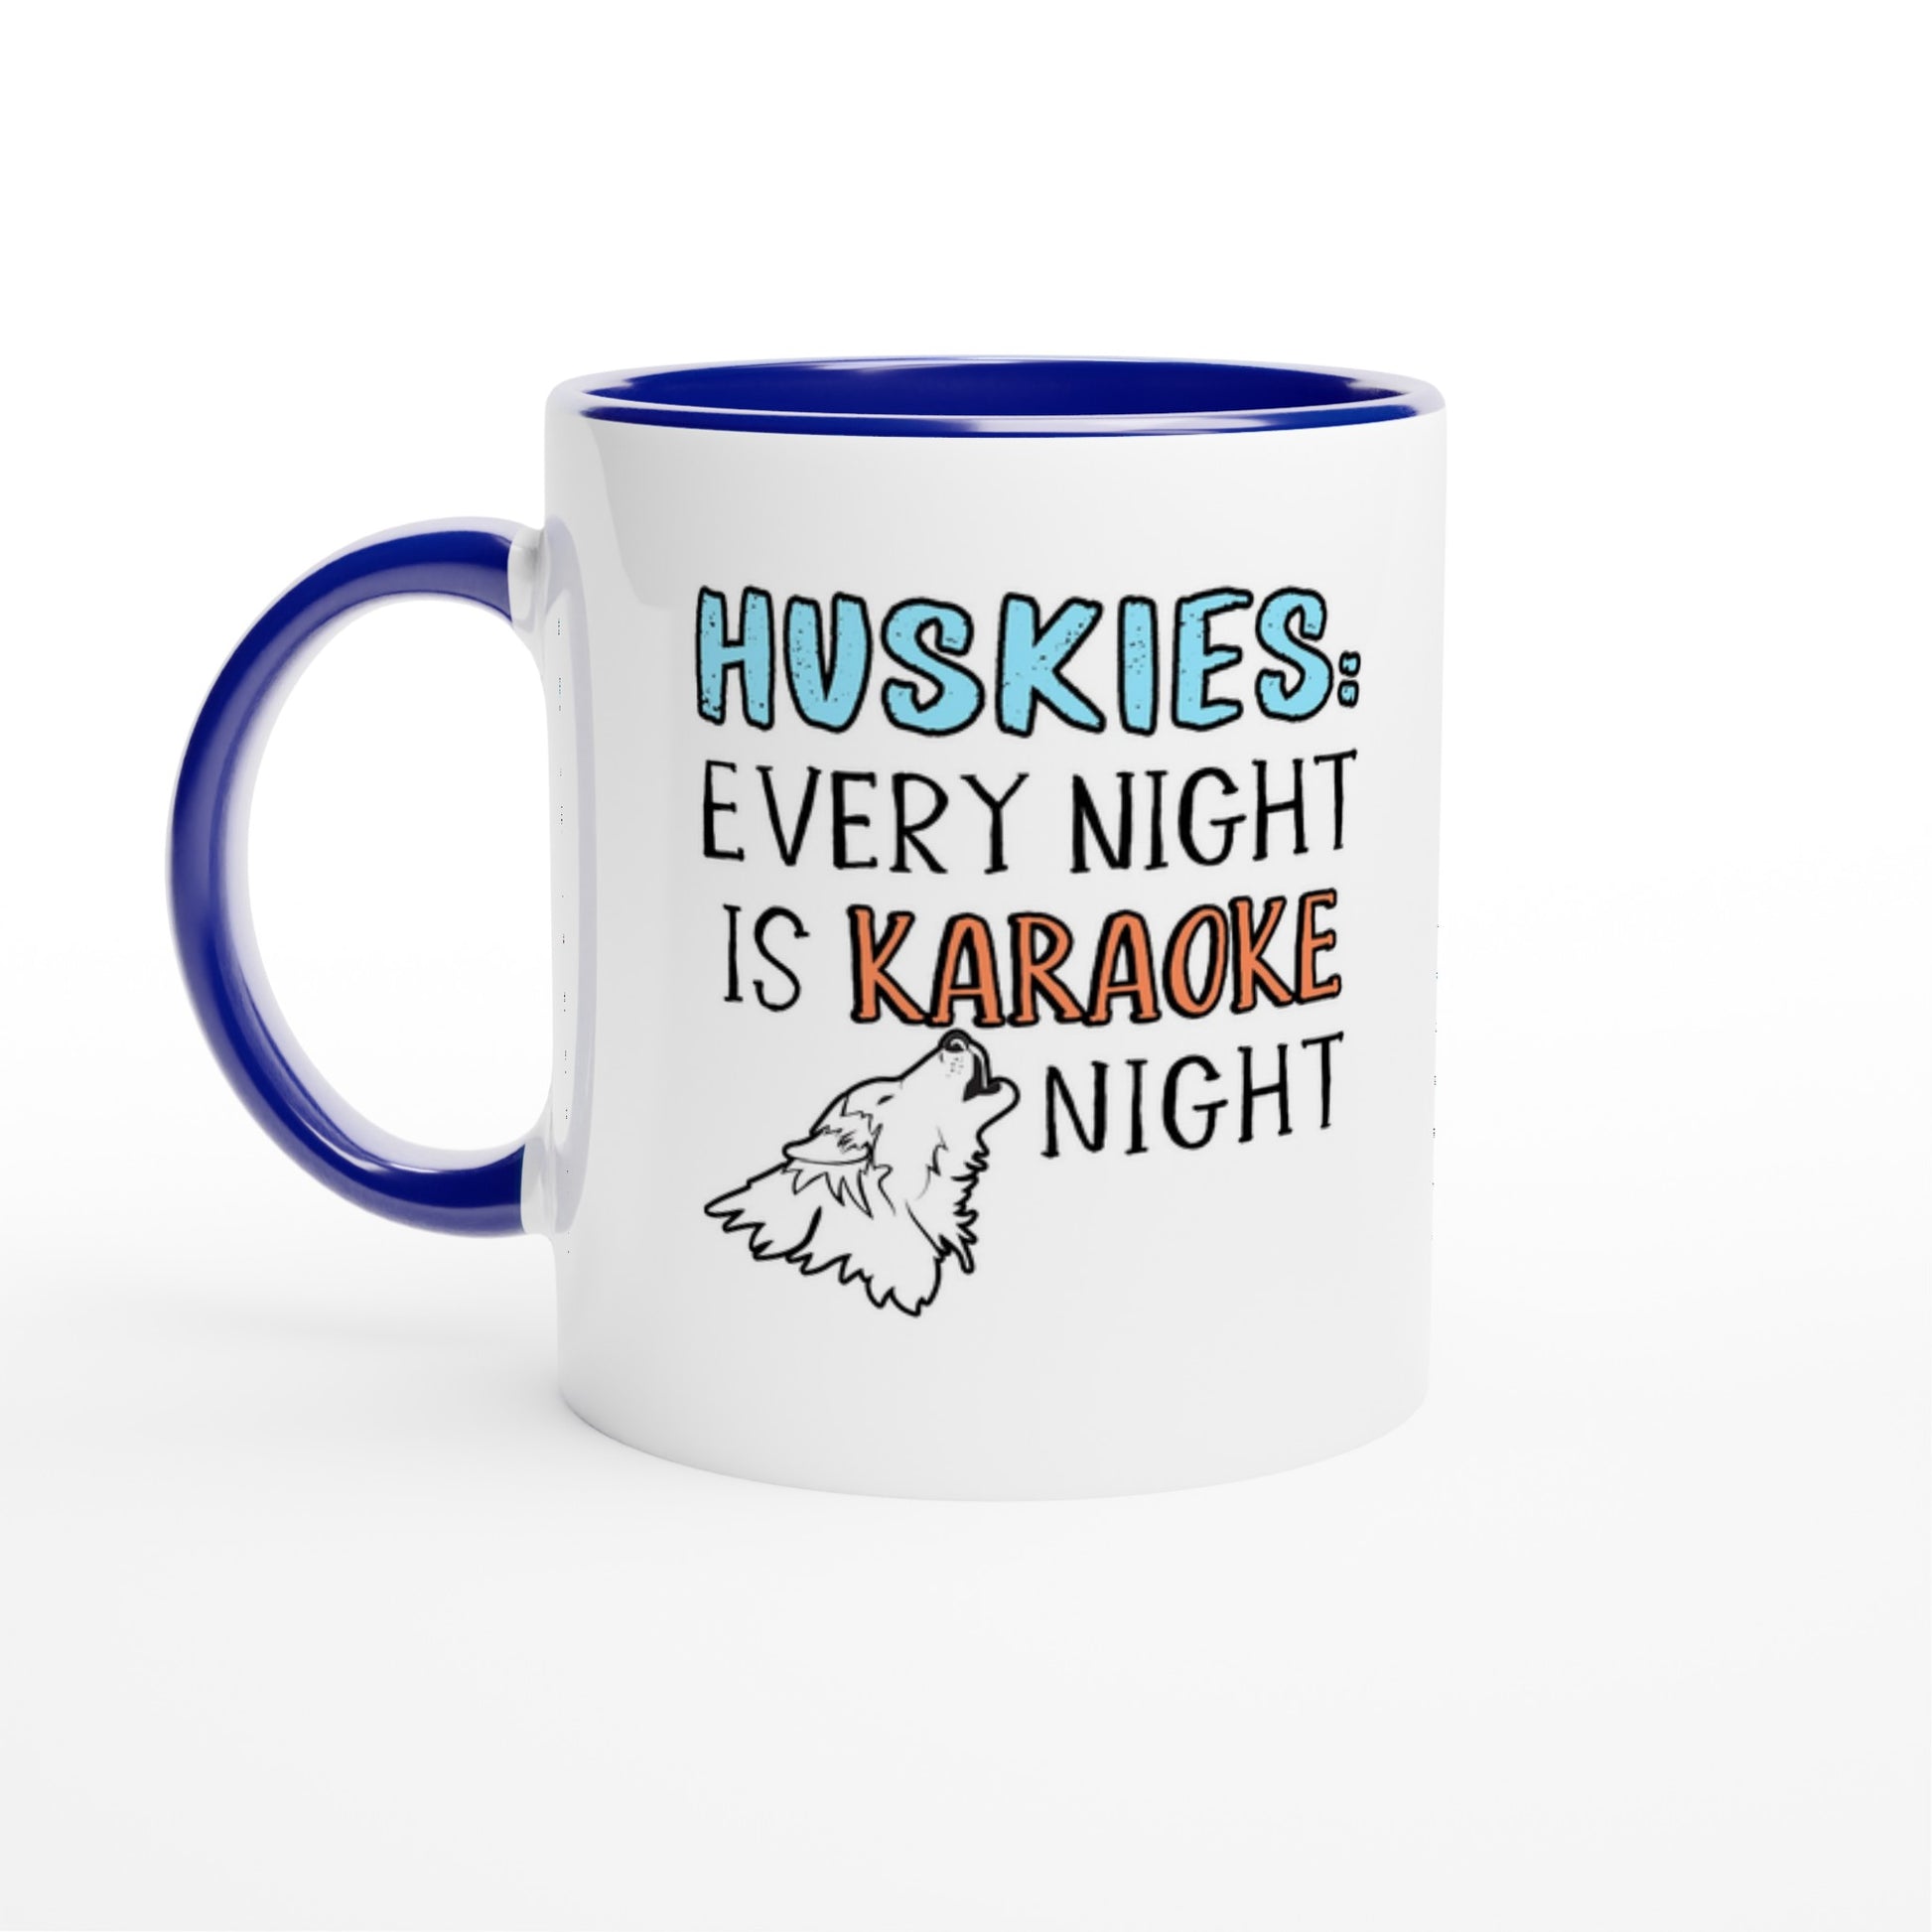 White ceramic coffee mug with the design: "HUSKIES: Every Night Is Karaoke Night.". The handle and interior are blue 